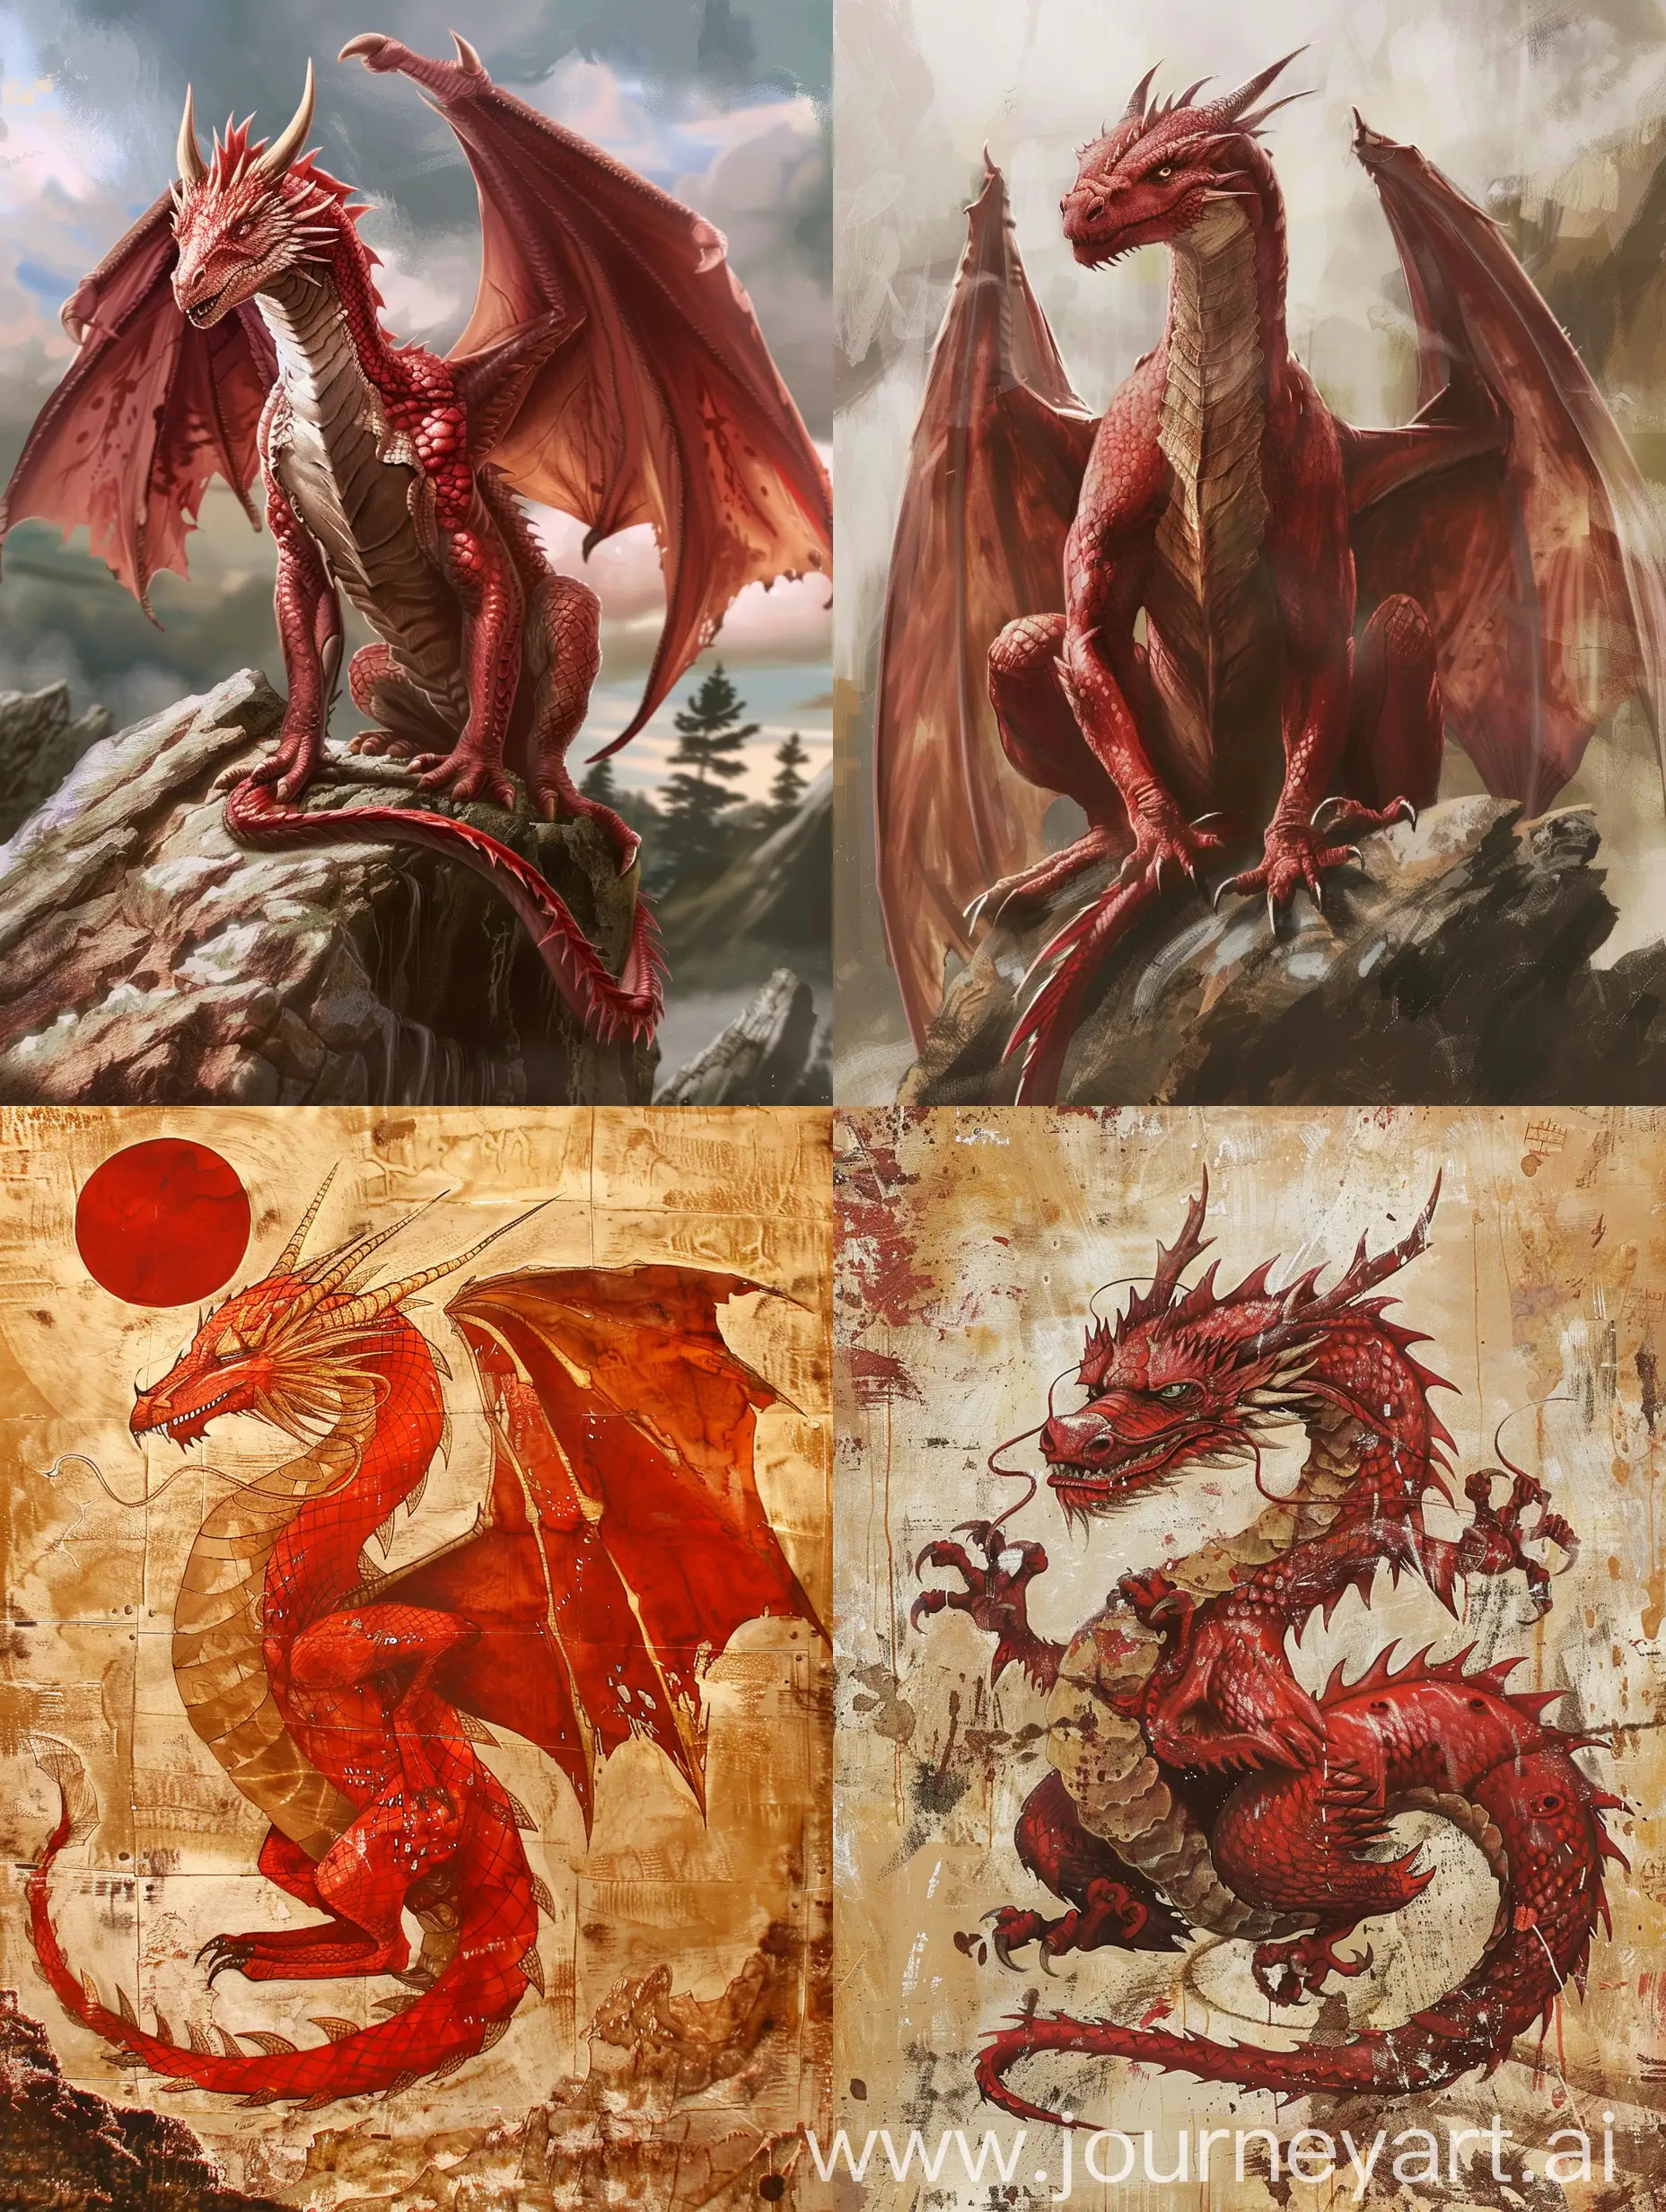 Majestic-Ancient-Red-Dragon-in-a-64-Aspect-Ratio-Landscape